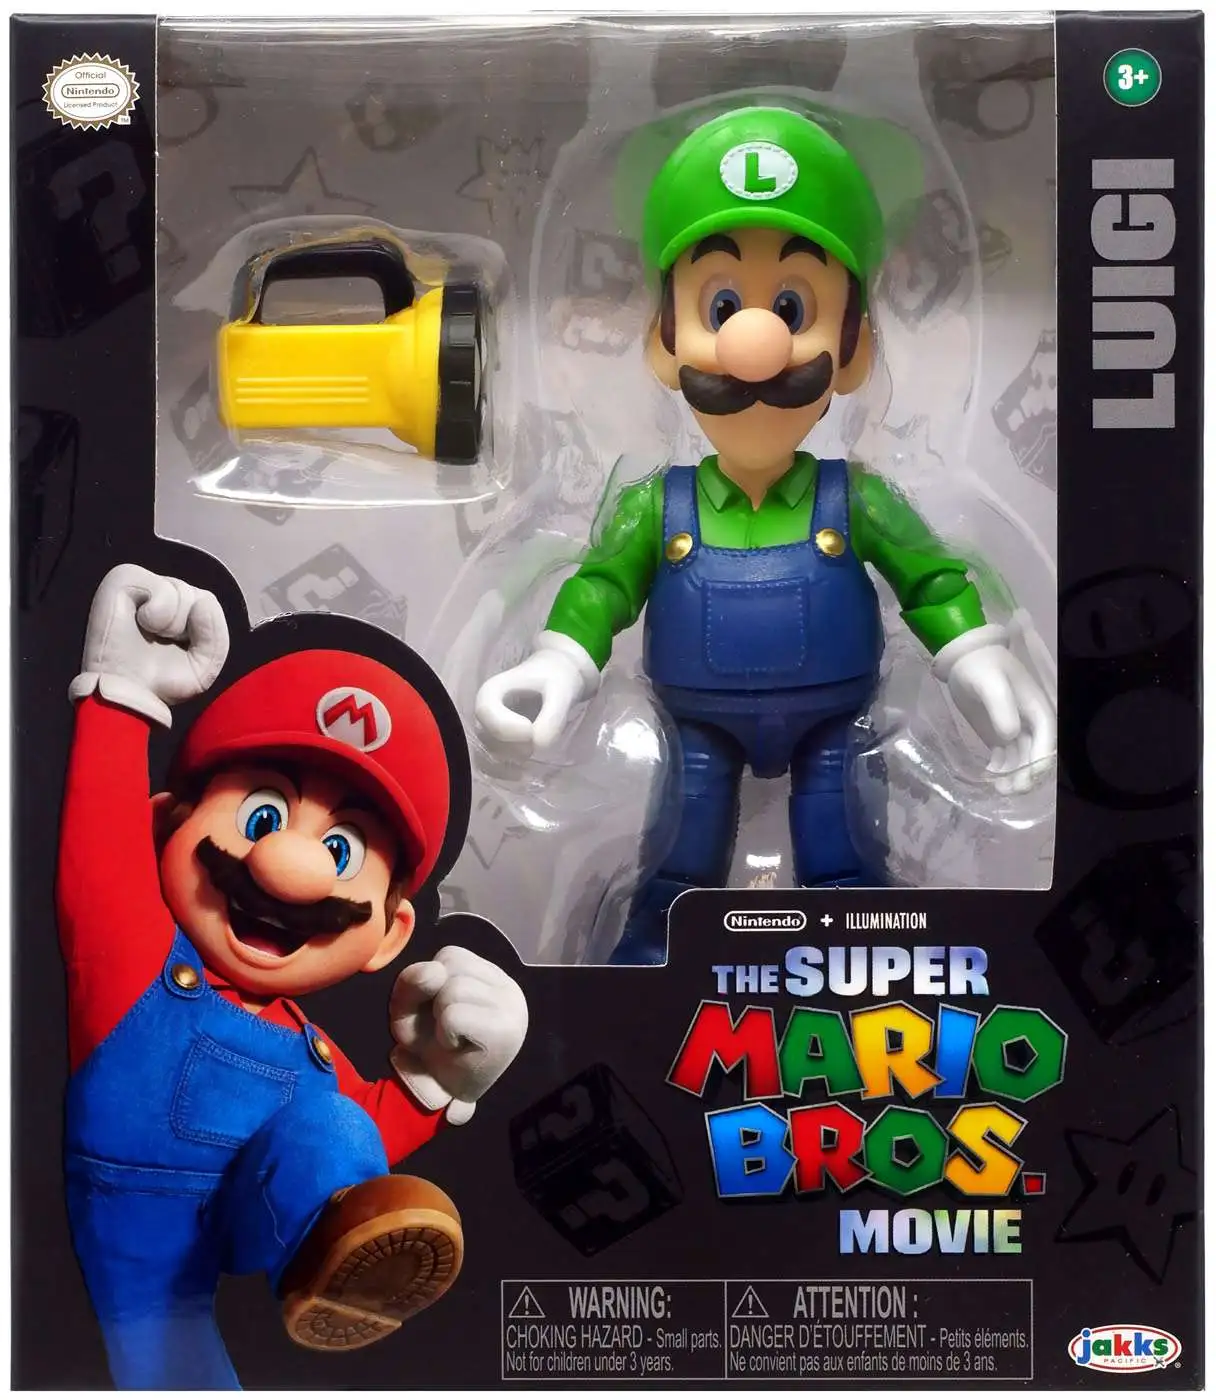 JAKKS The Super Mario Bros Movie Bowser Luigi Toad Princess Peach